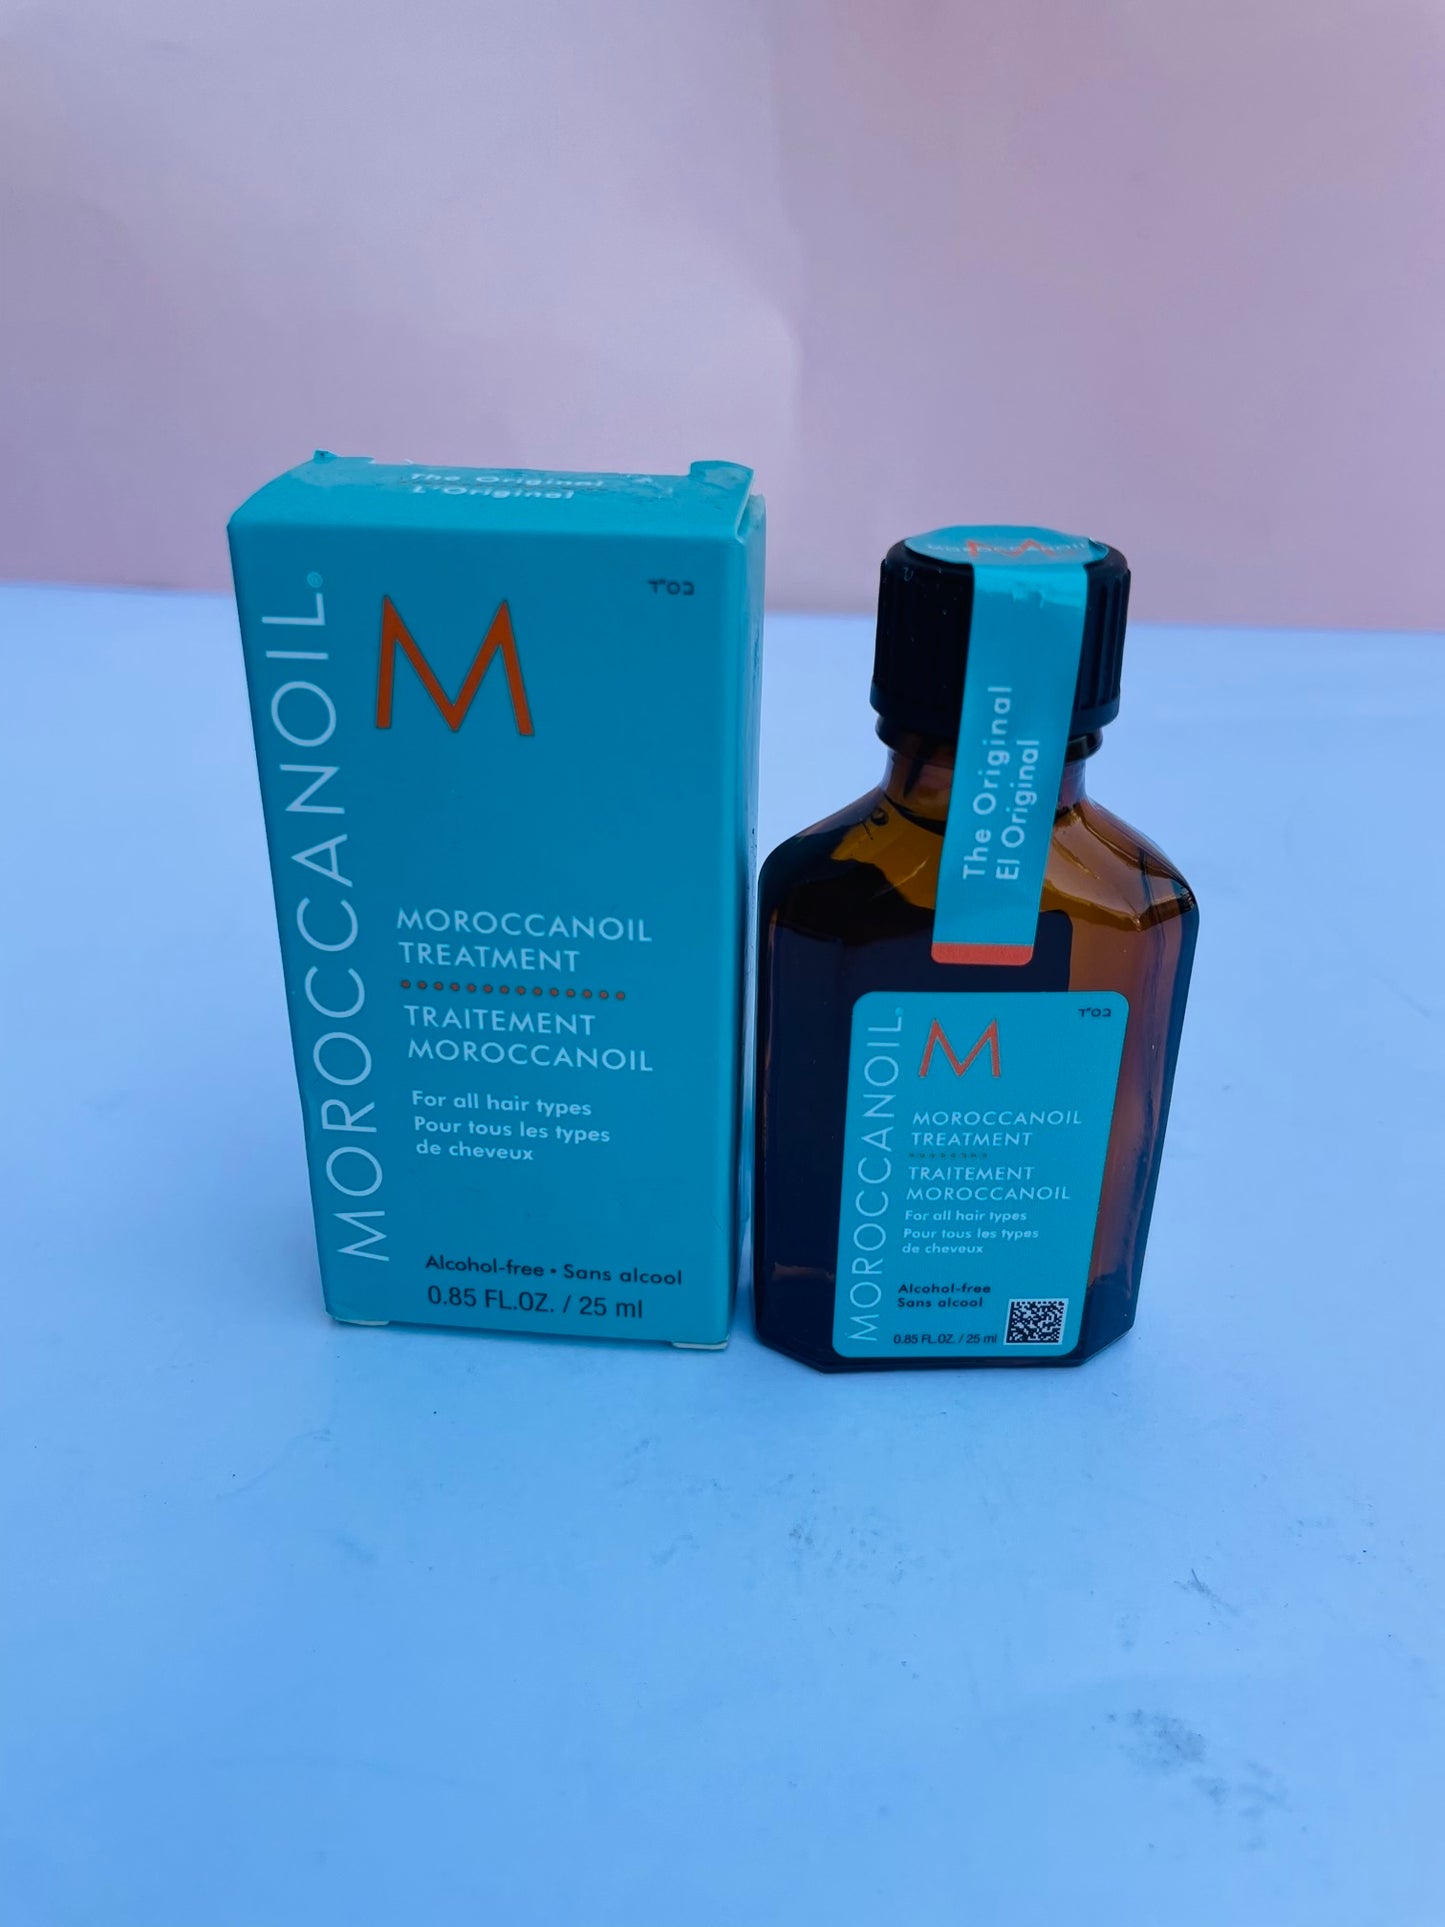 Moroccanoil hair treatment oil